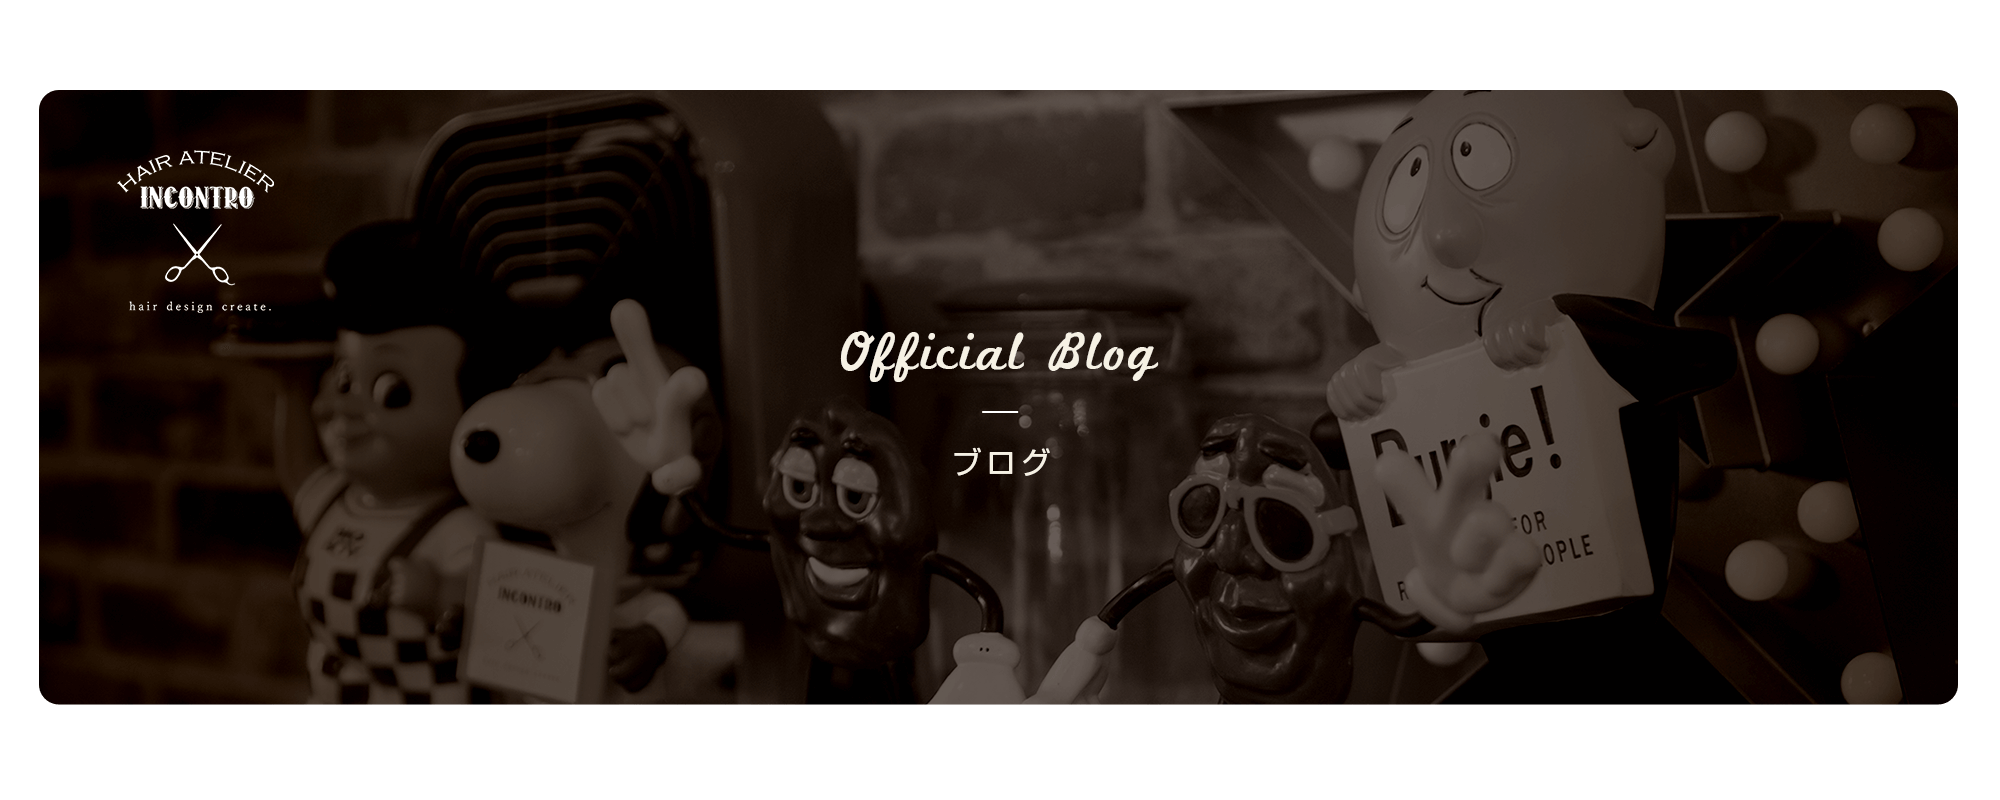 Official Blog